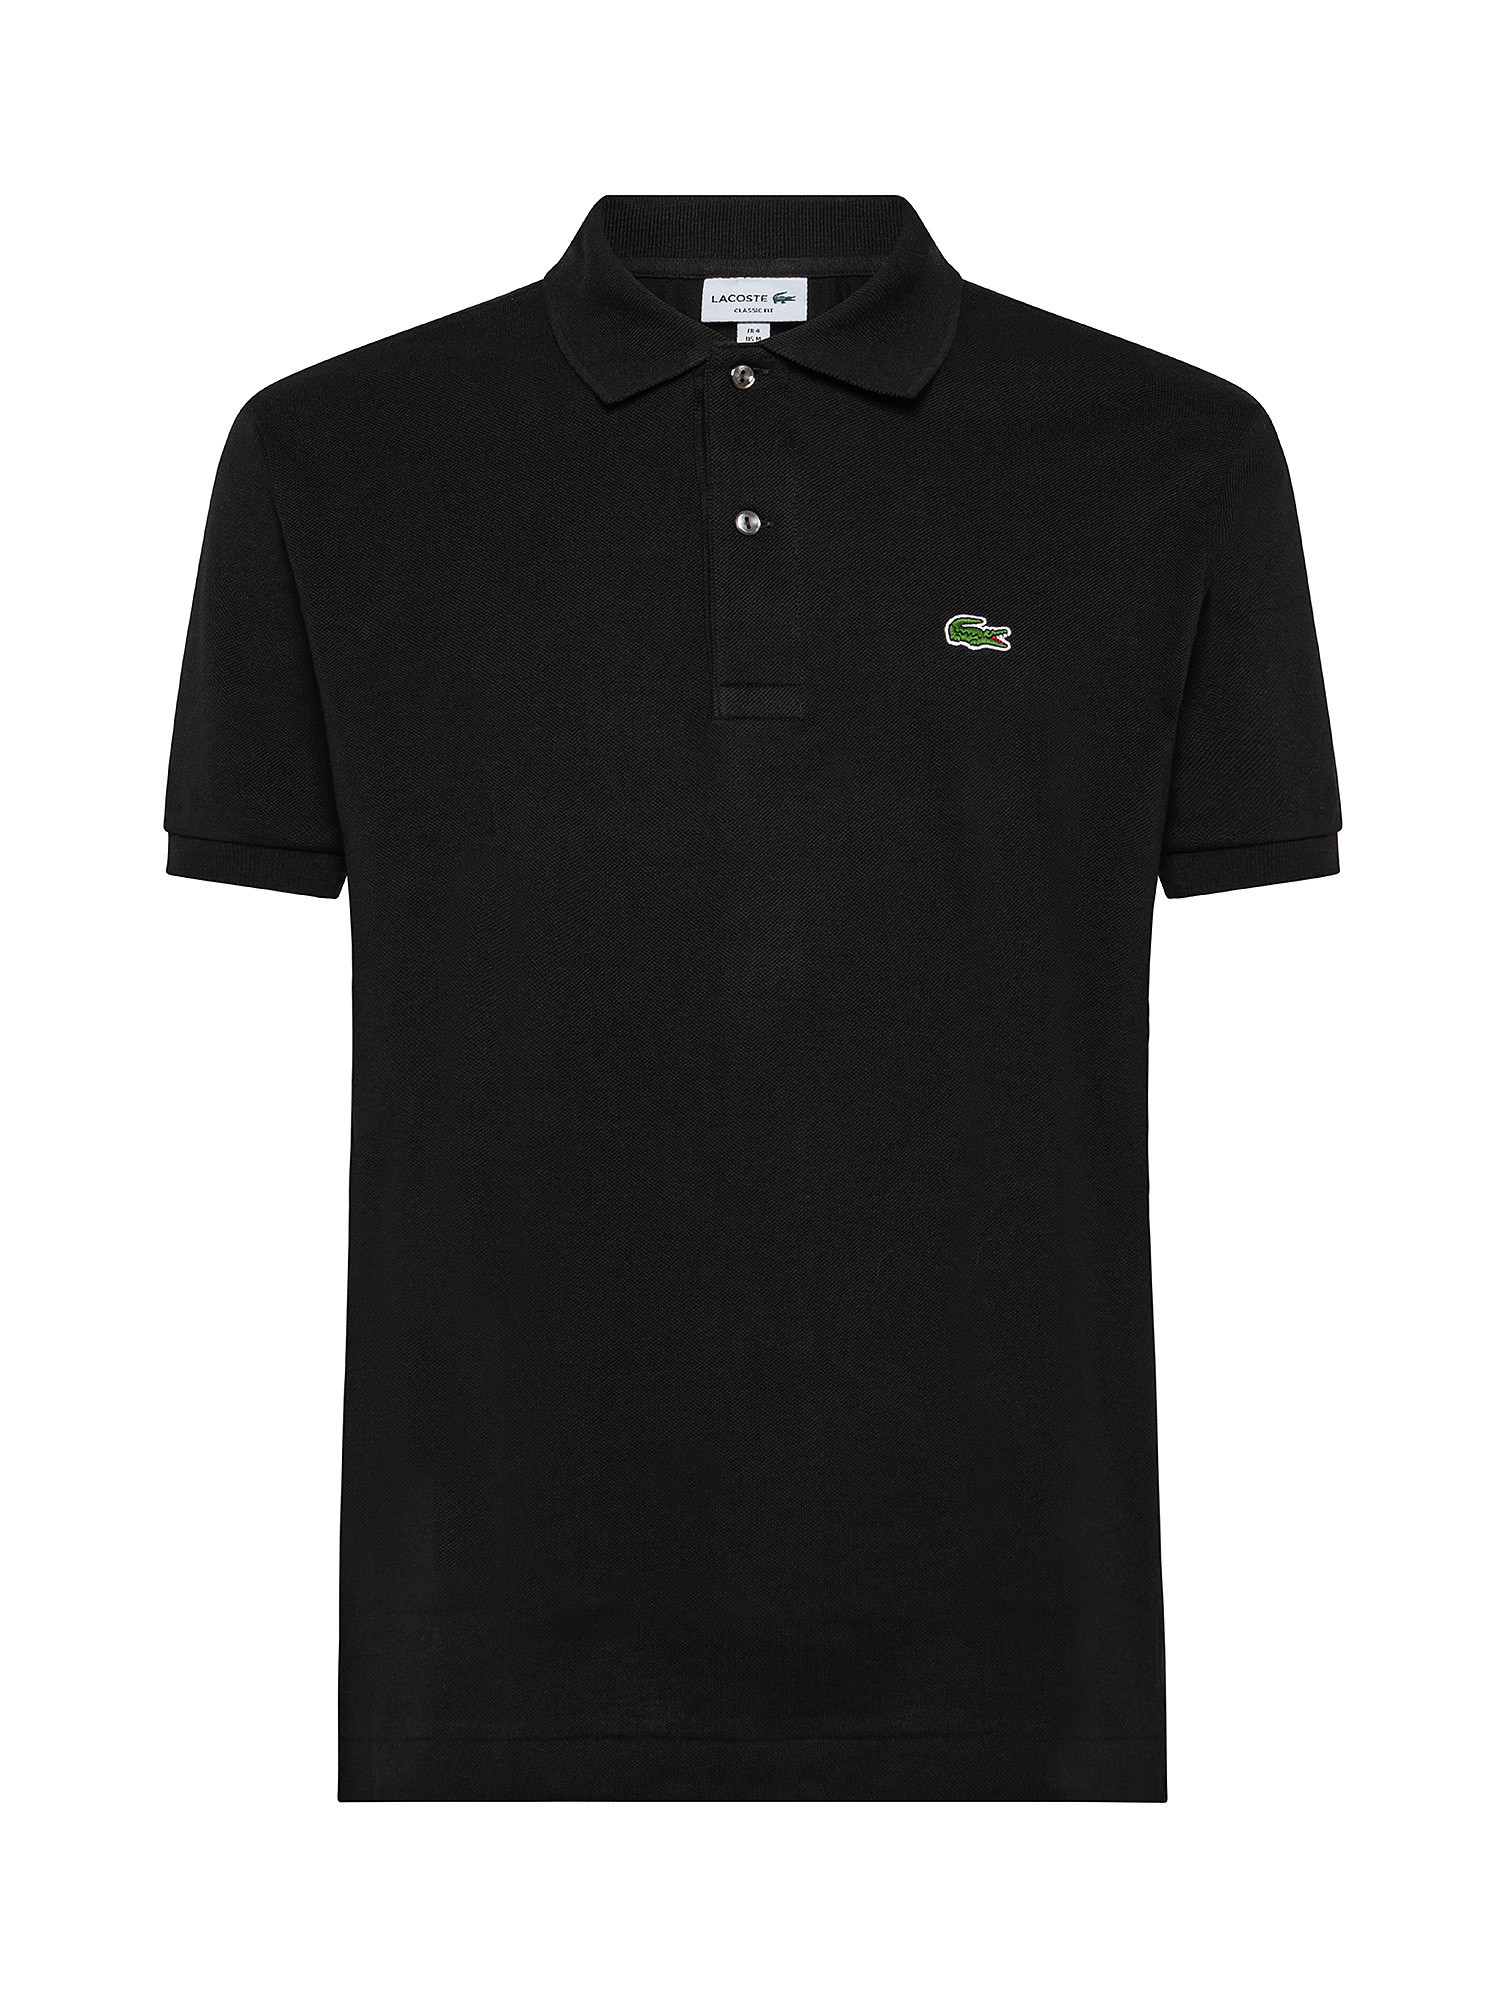 Polo shirt, Black, large image number 0